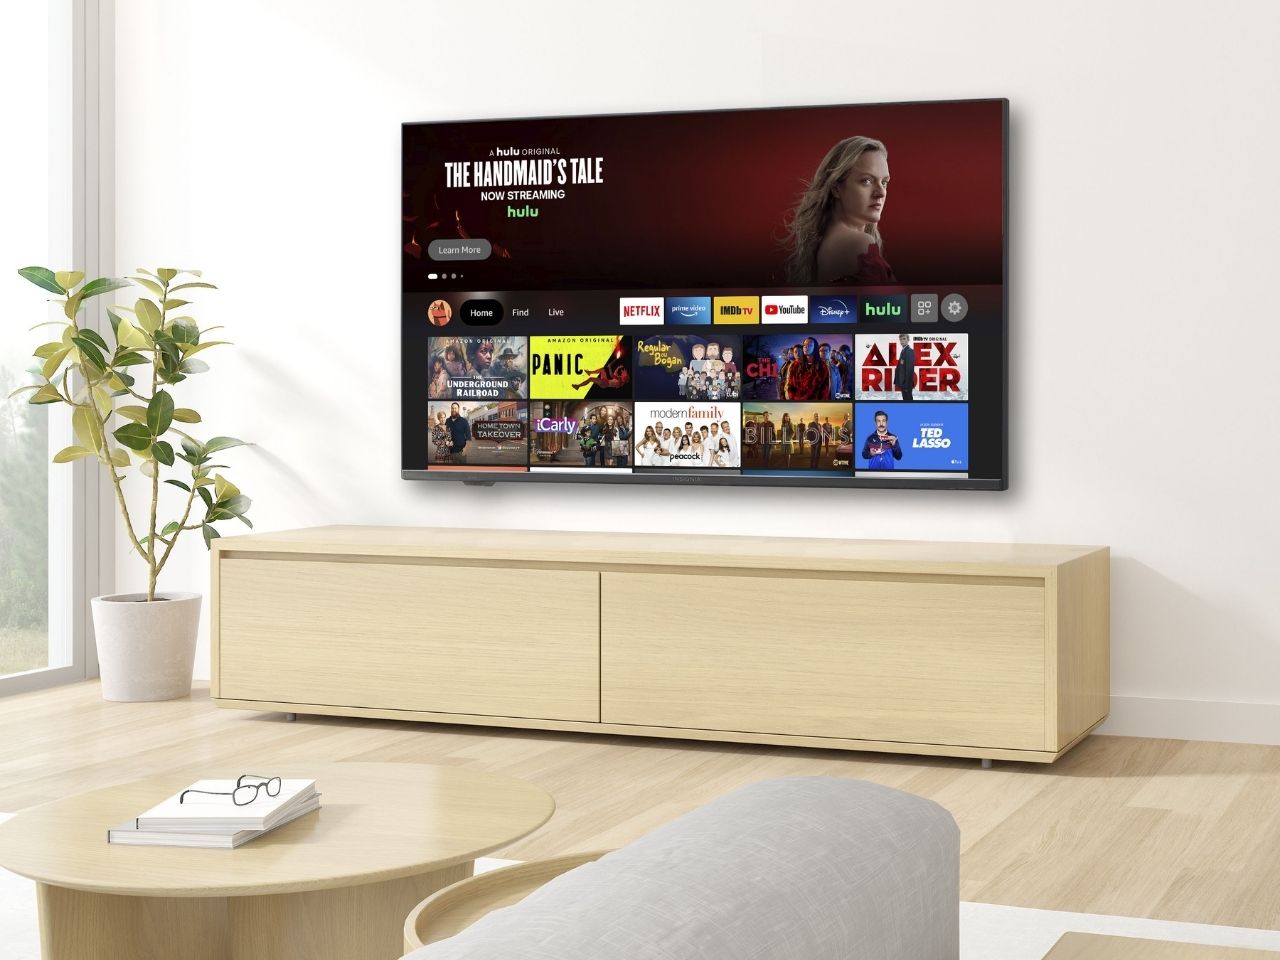 Inignnia F30 50-inch 4K Smart TV in the living room.